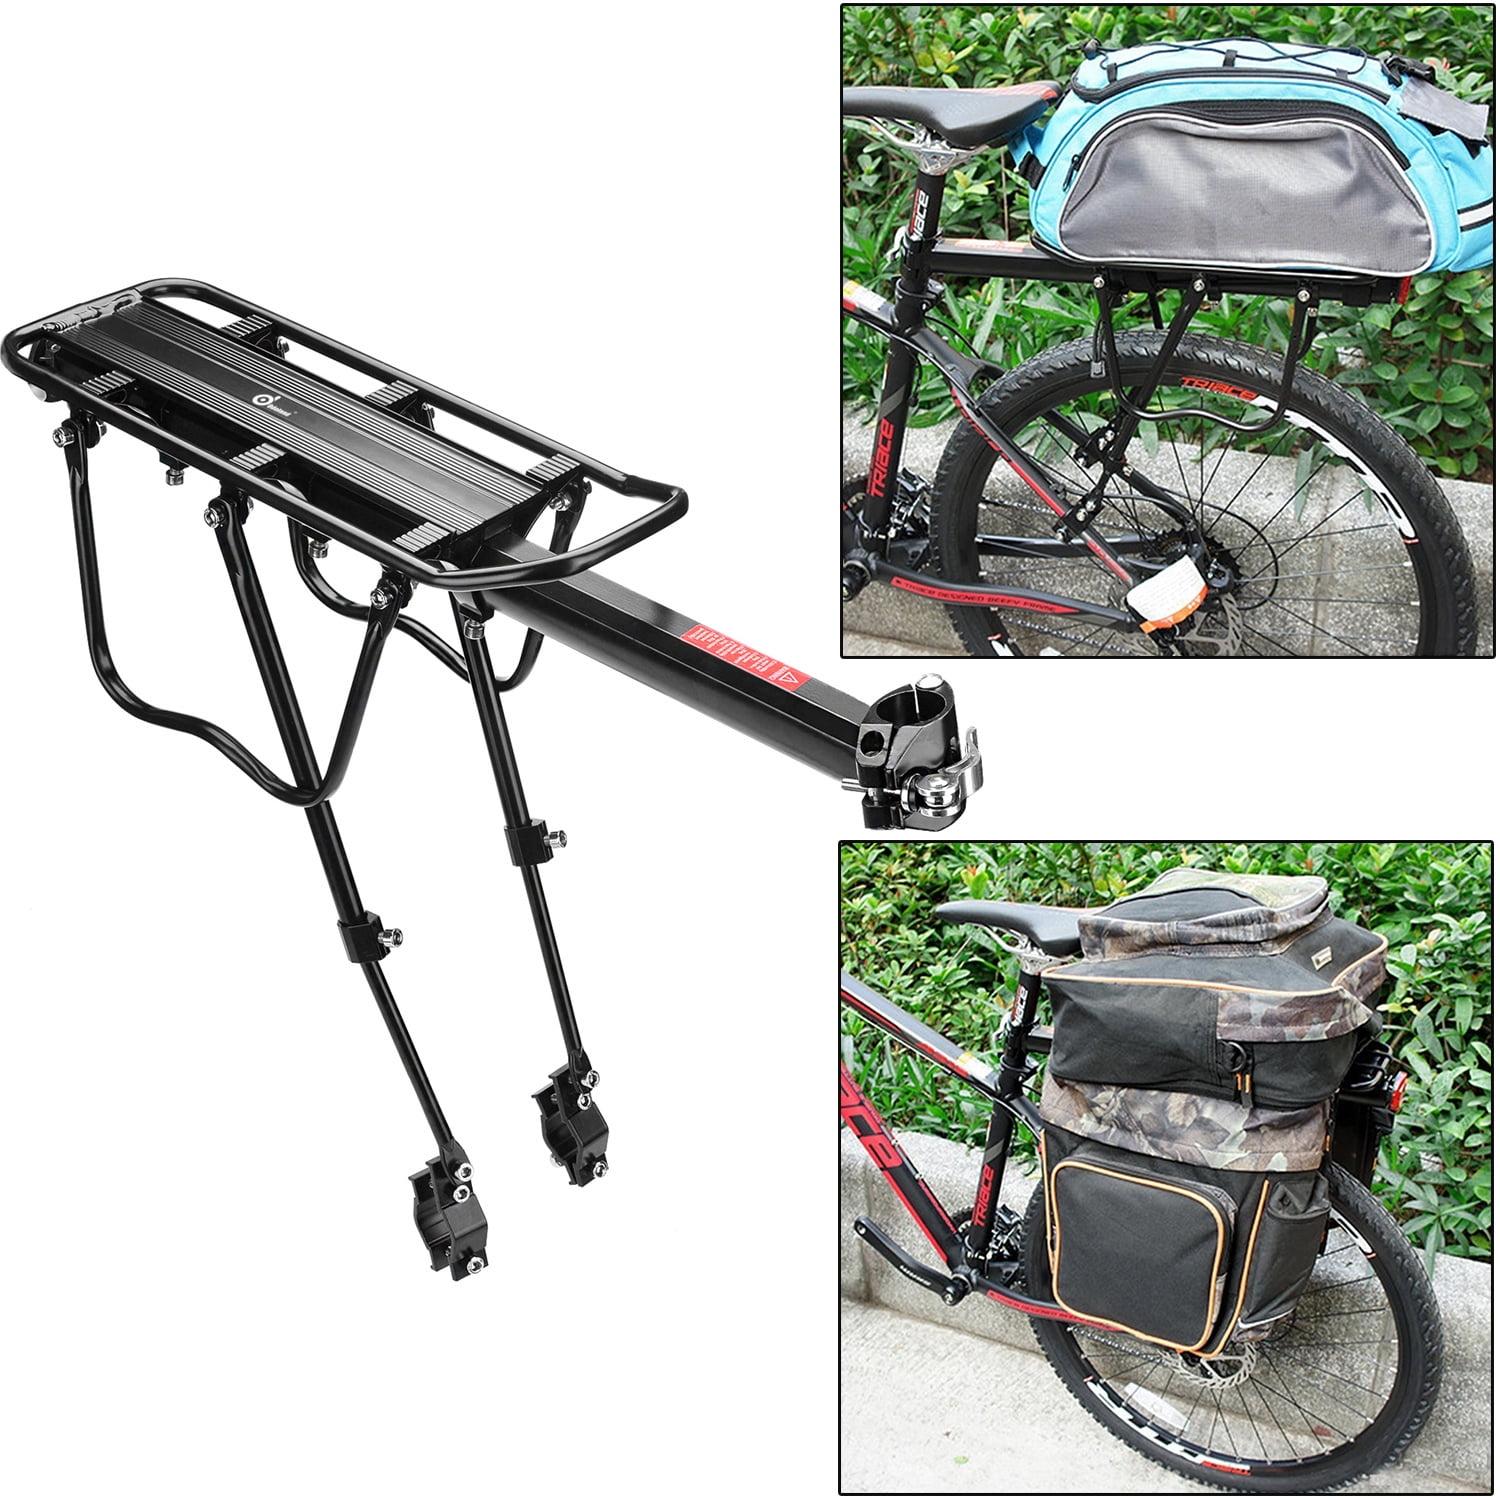 110 lbs Capacity Adjustable Rear Bike Rack Carrier Luggage 